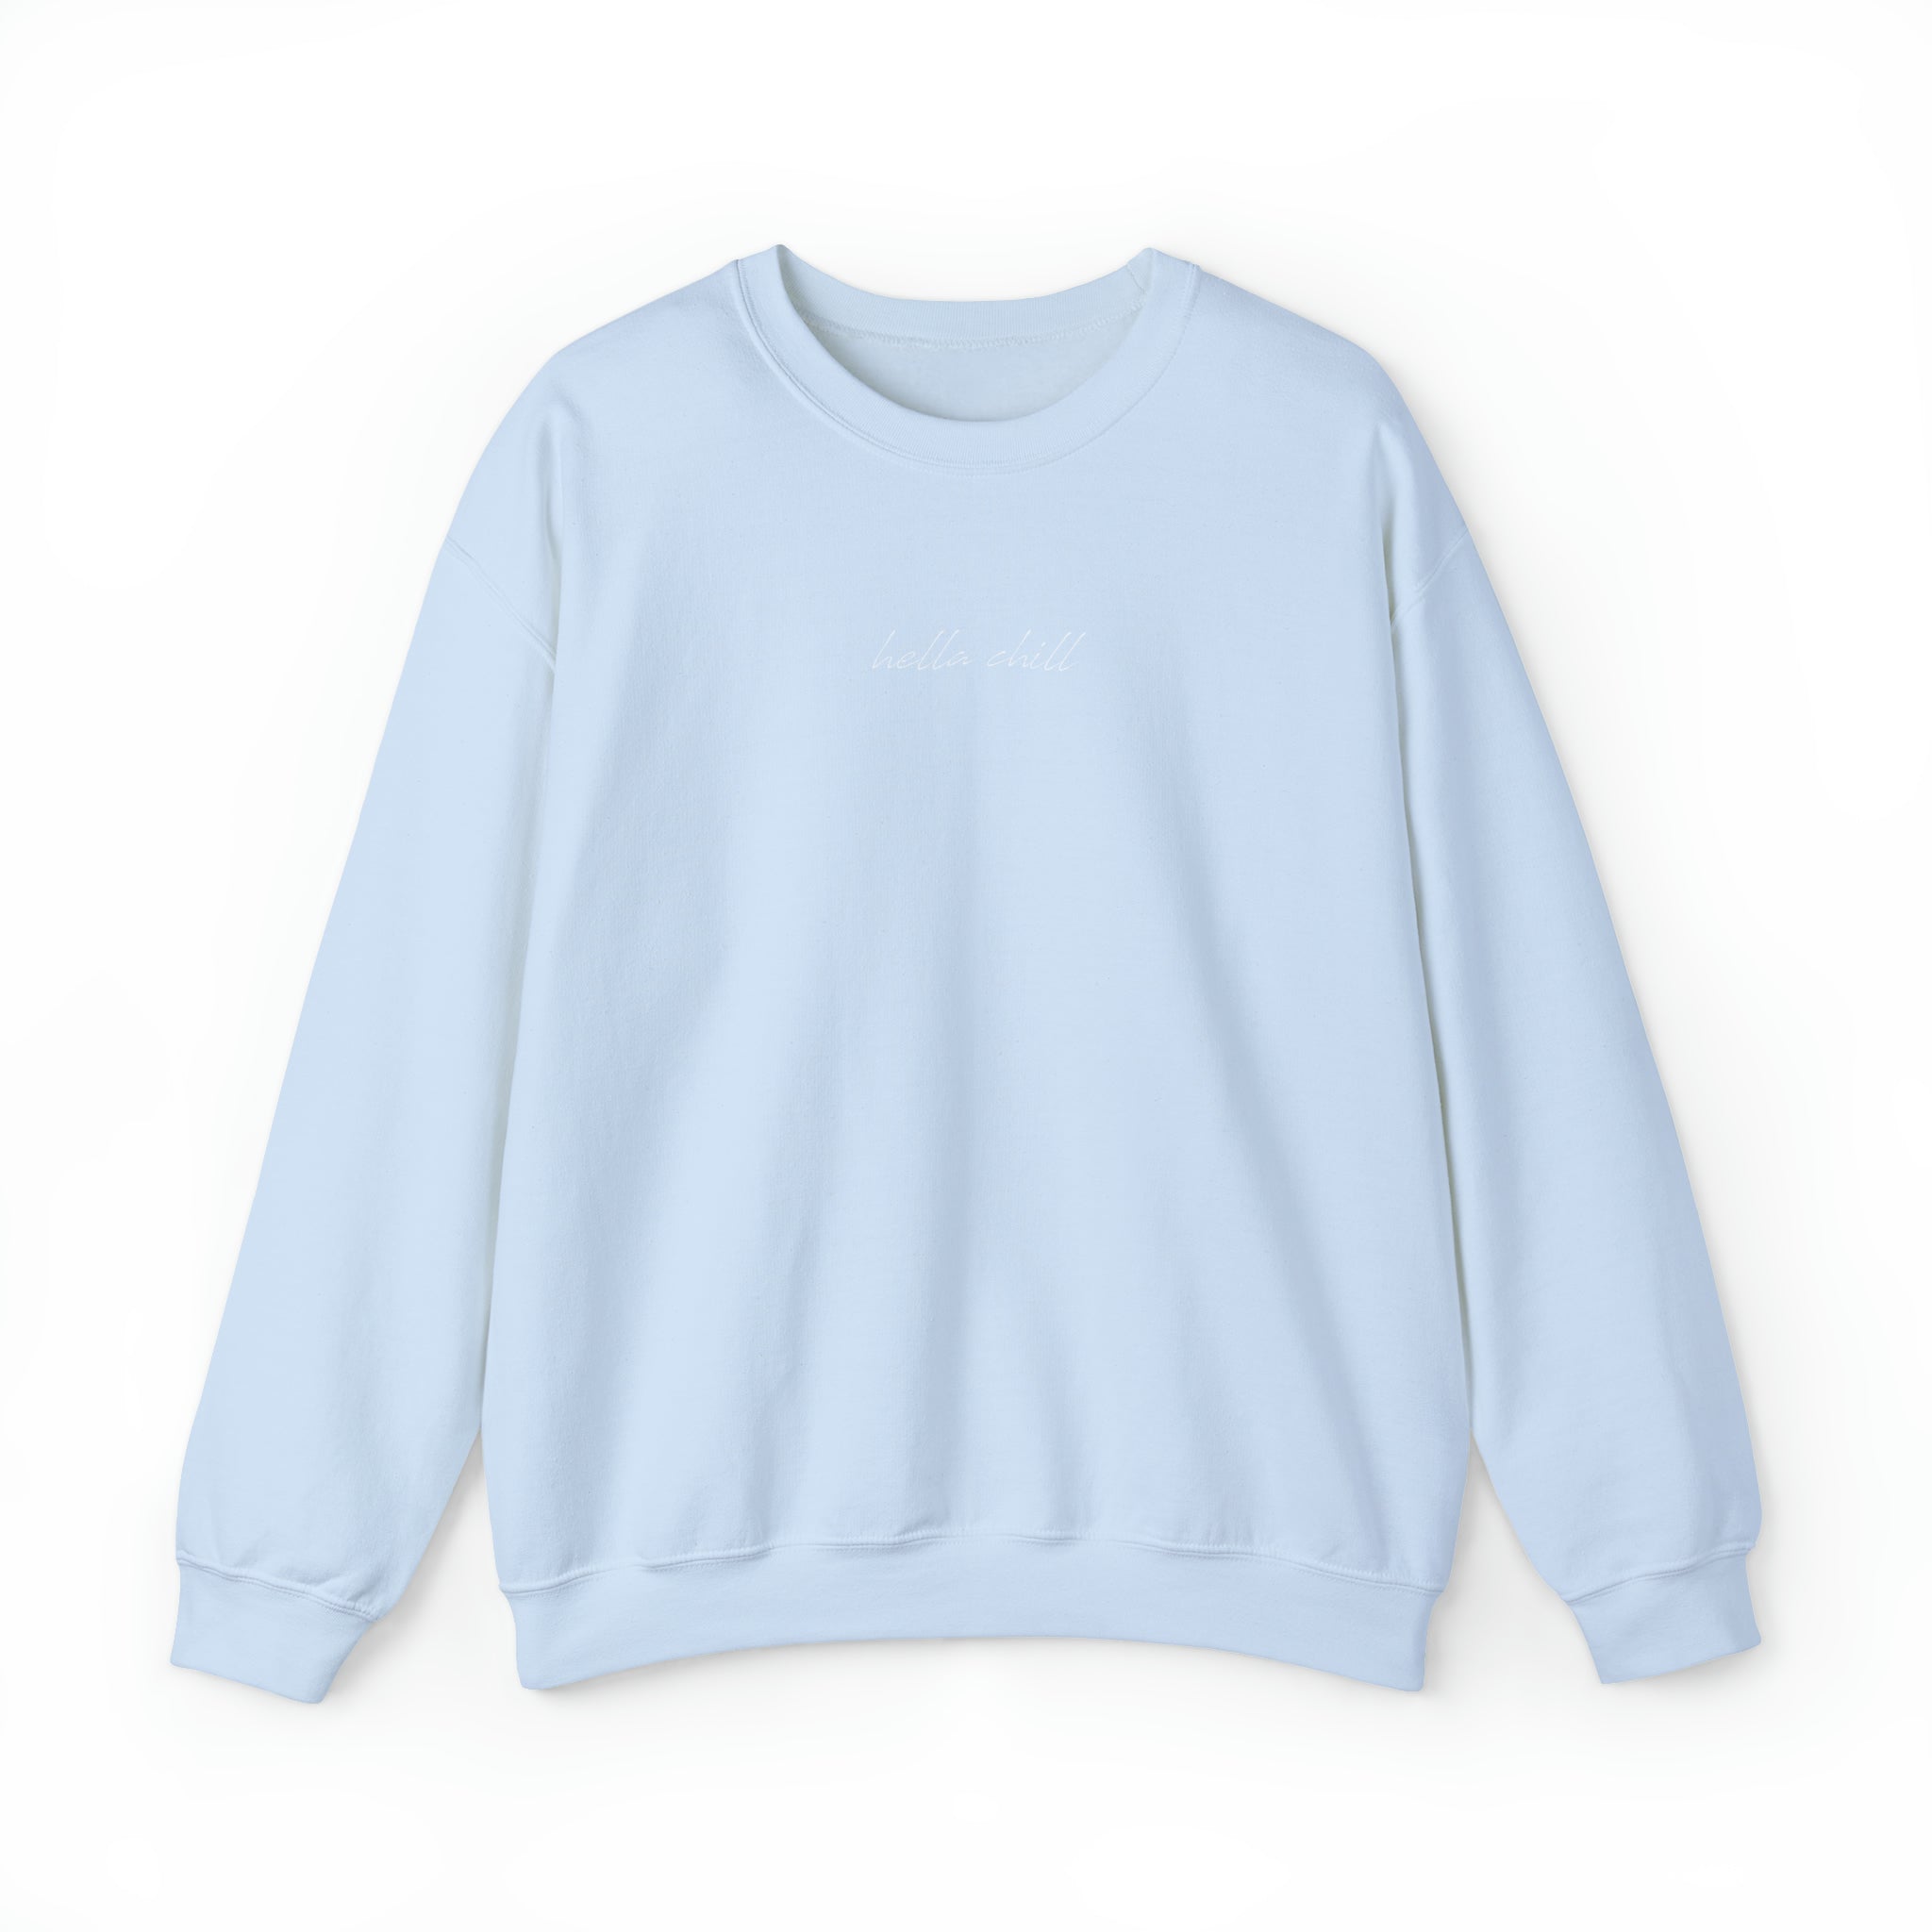 Hella Chill Margarita Crewneck Unisex Sweatshirt (Light Blue)